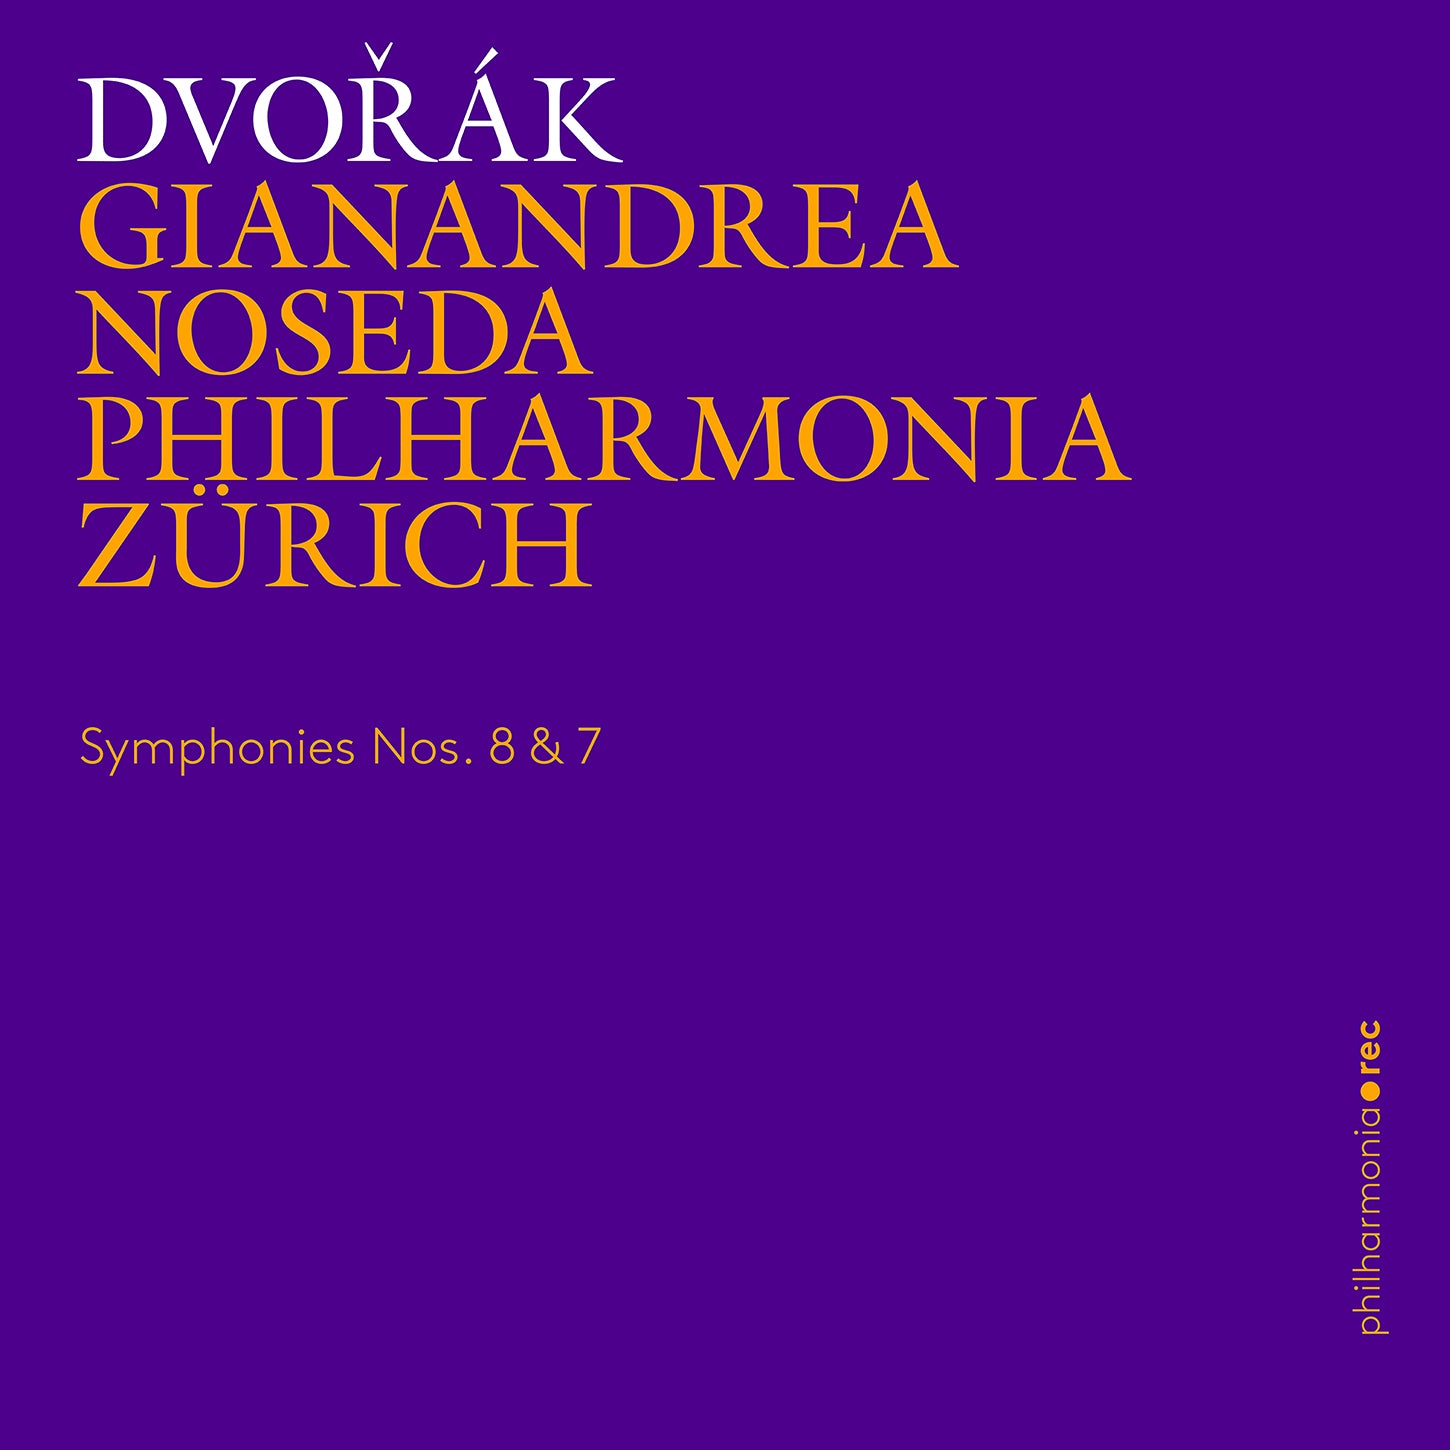 Dvořák: Symphonies Nos. 8 & 7 / Noseda, Philharmonia Zurich